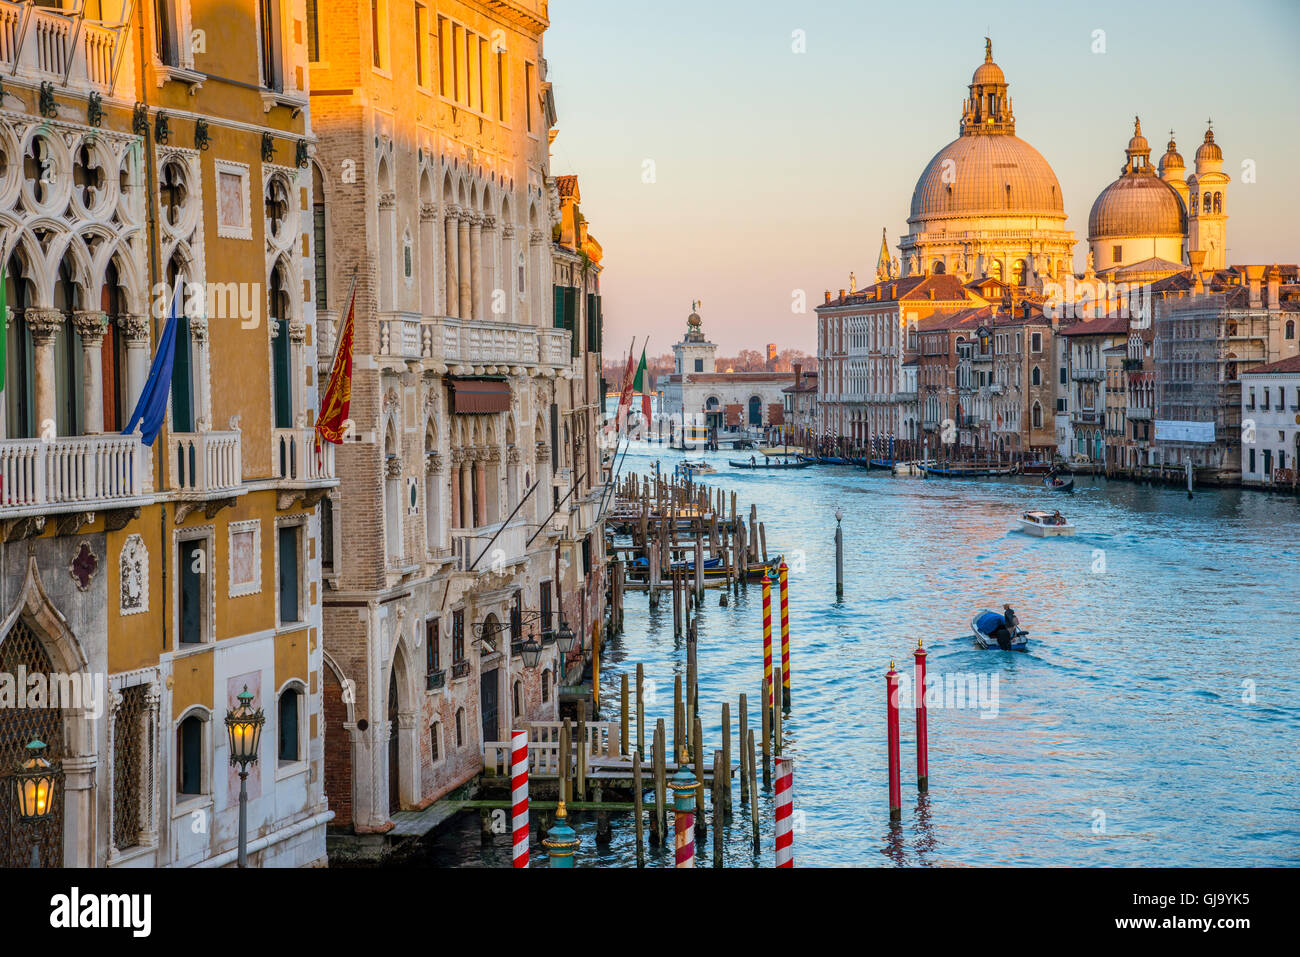 Dusk Scene of the Grand Canal in Venice, Italy with a view of the Santa Maria della Salute Basilica. Stock Photo